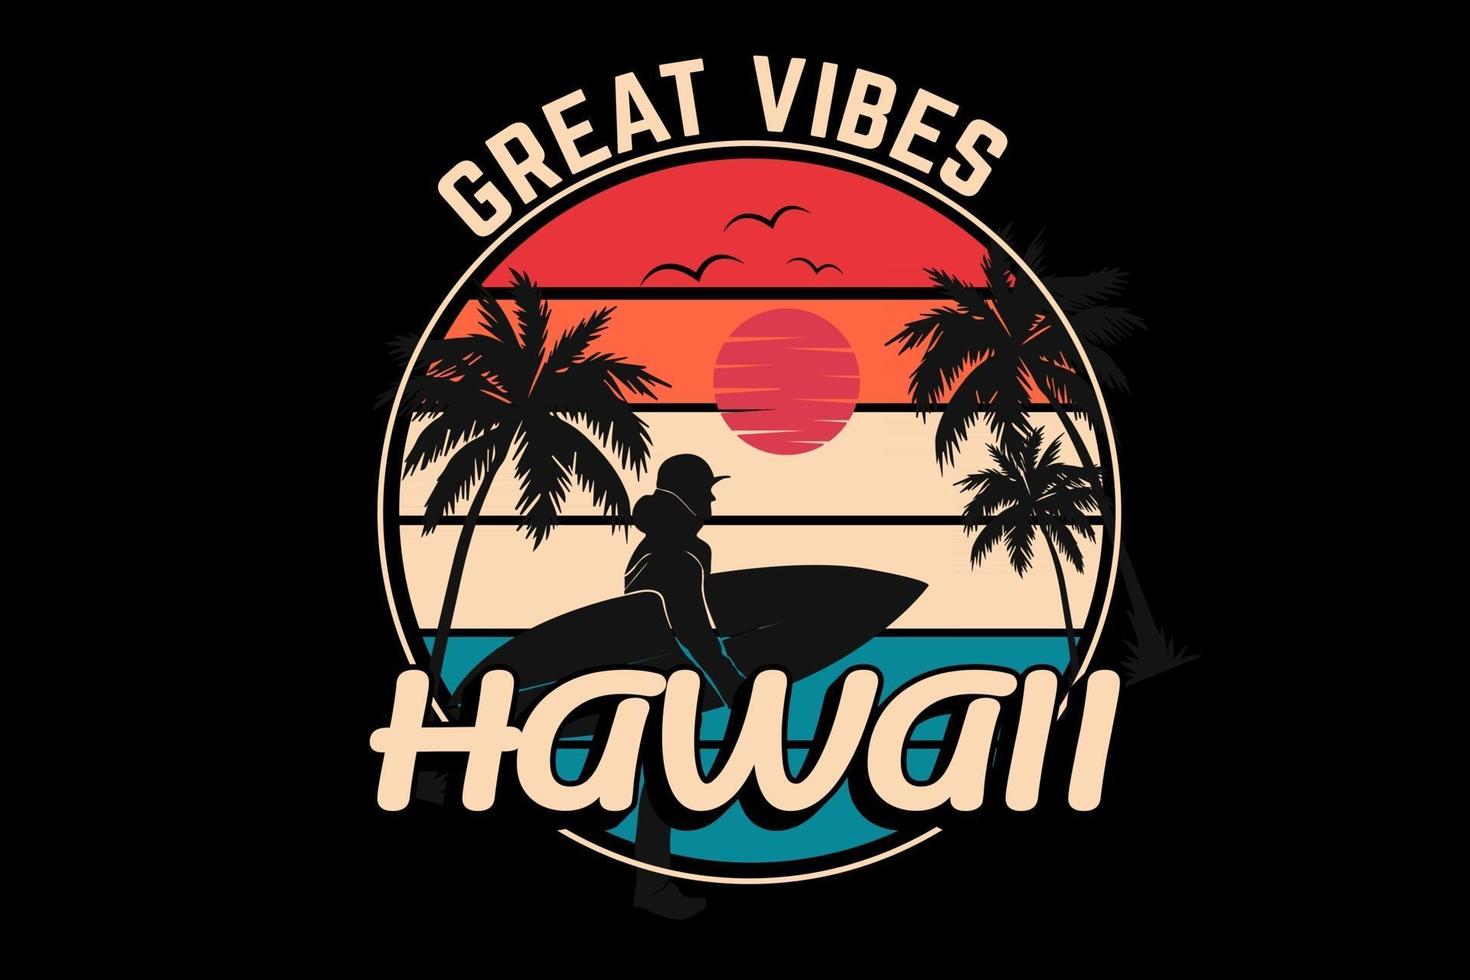 gran vibra hawaii silueta diseño retro estilo vintage vector